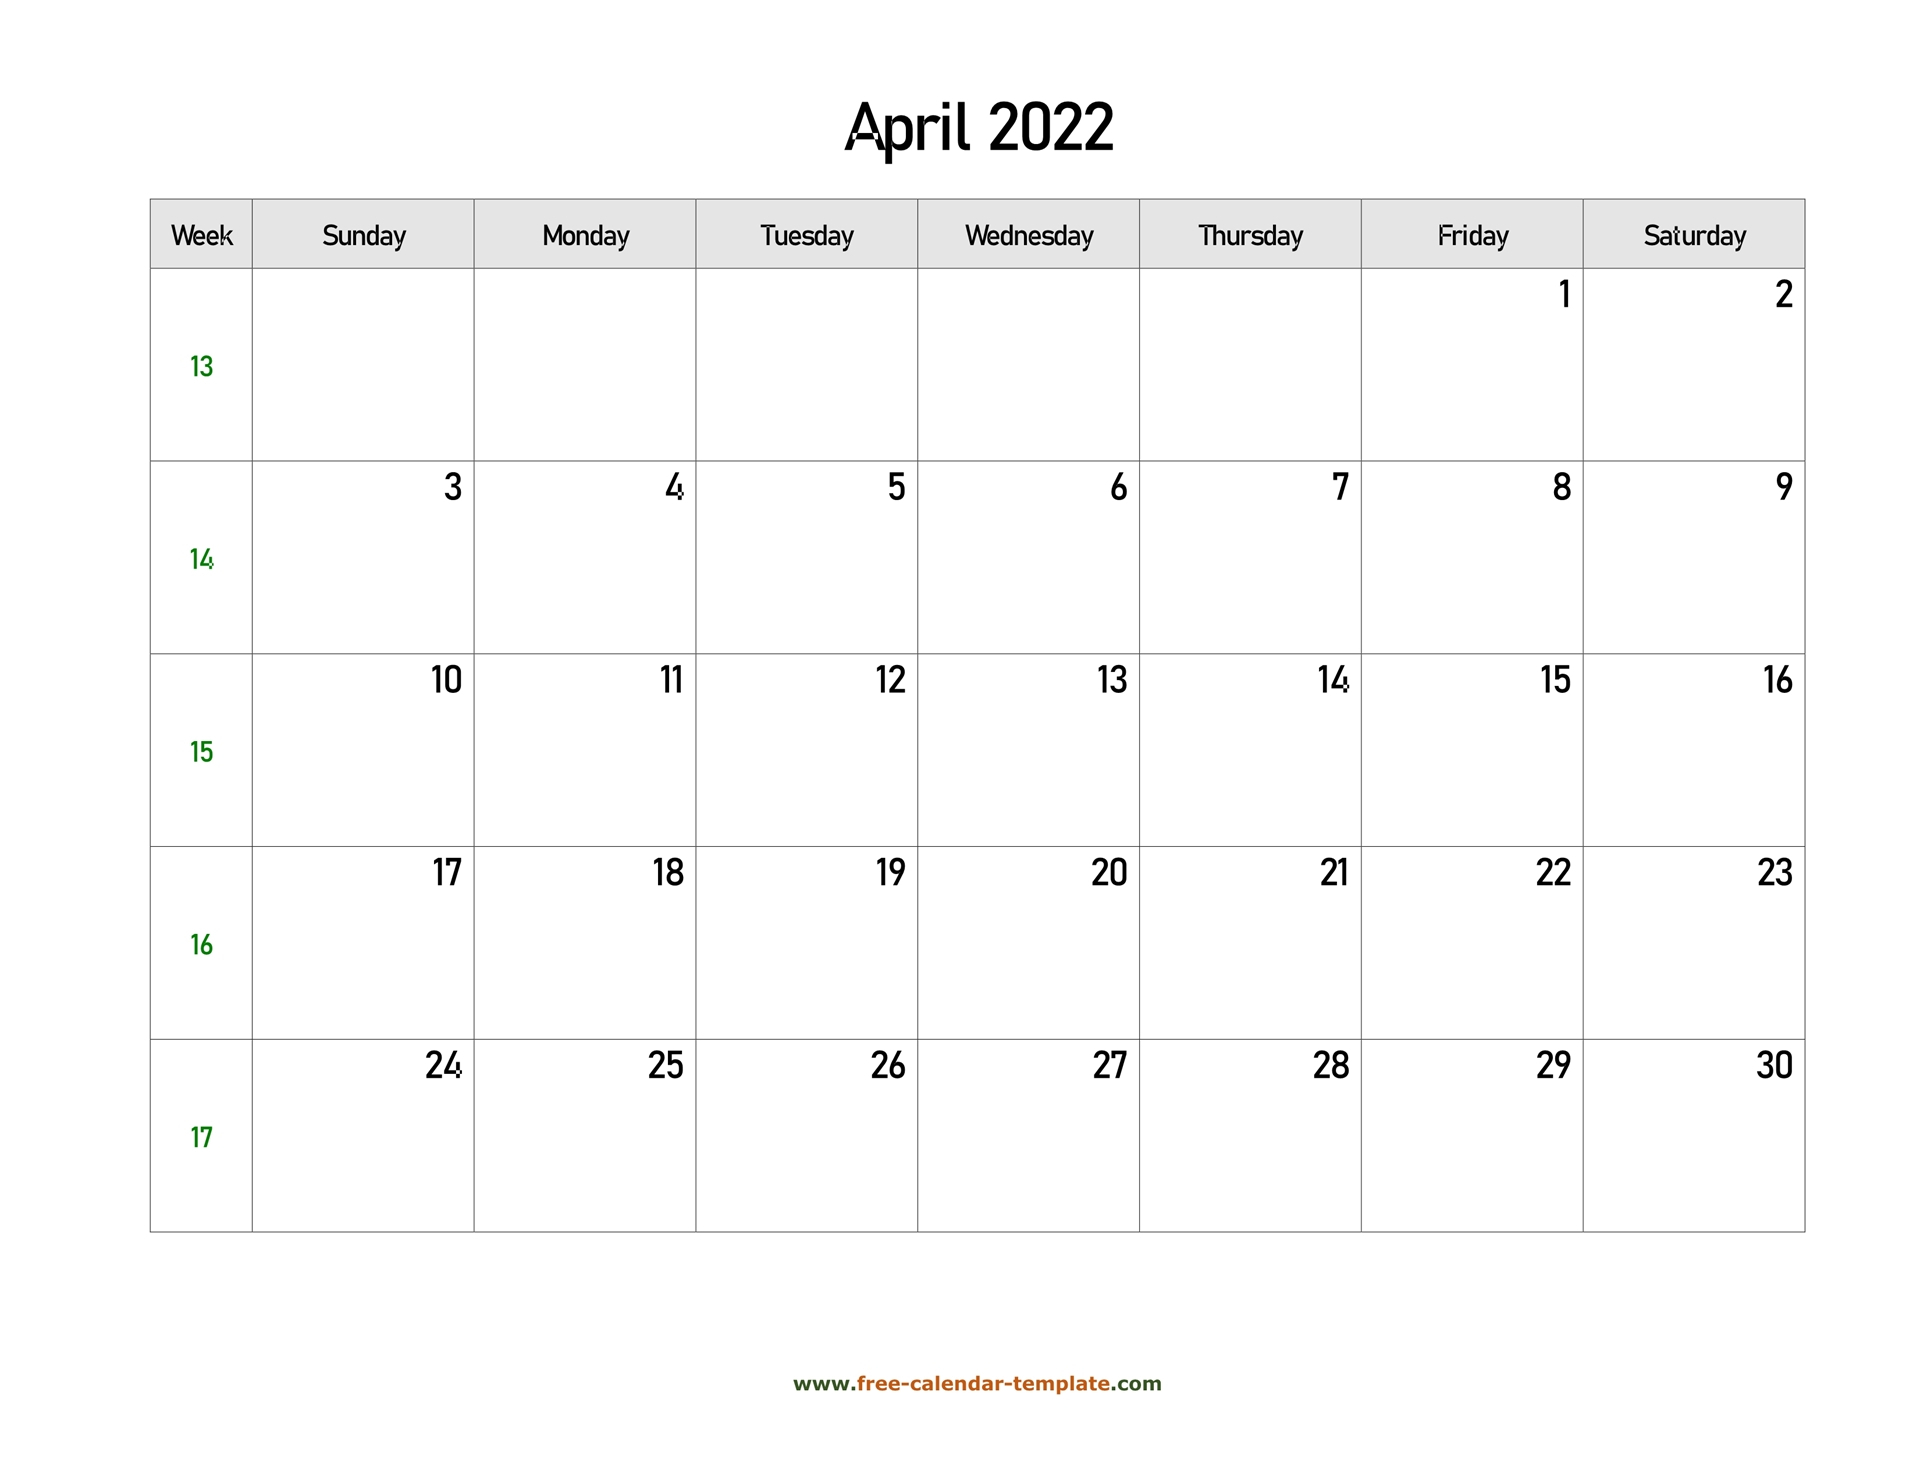 Free 2022 Calendar Blank April Template (Horizontal